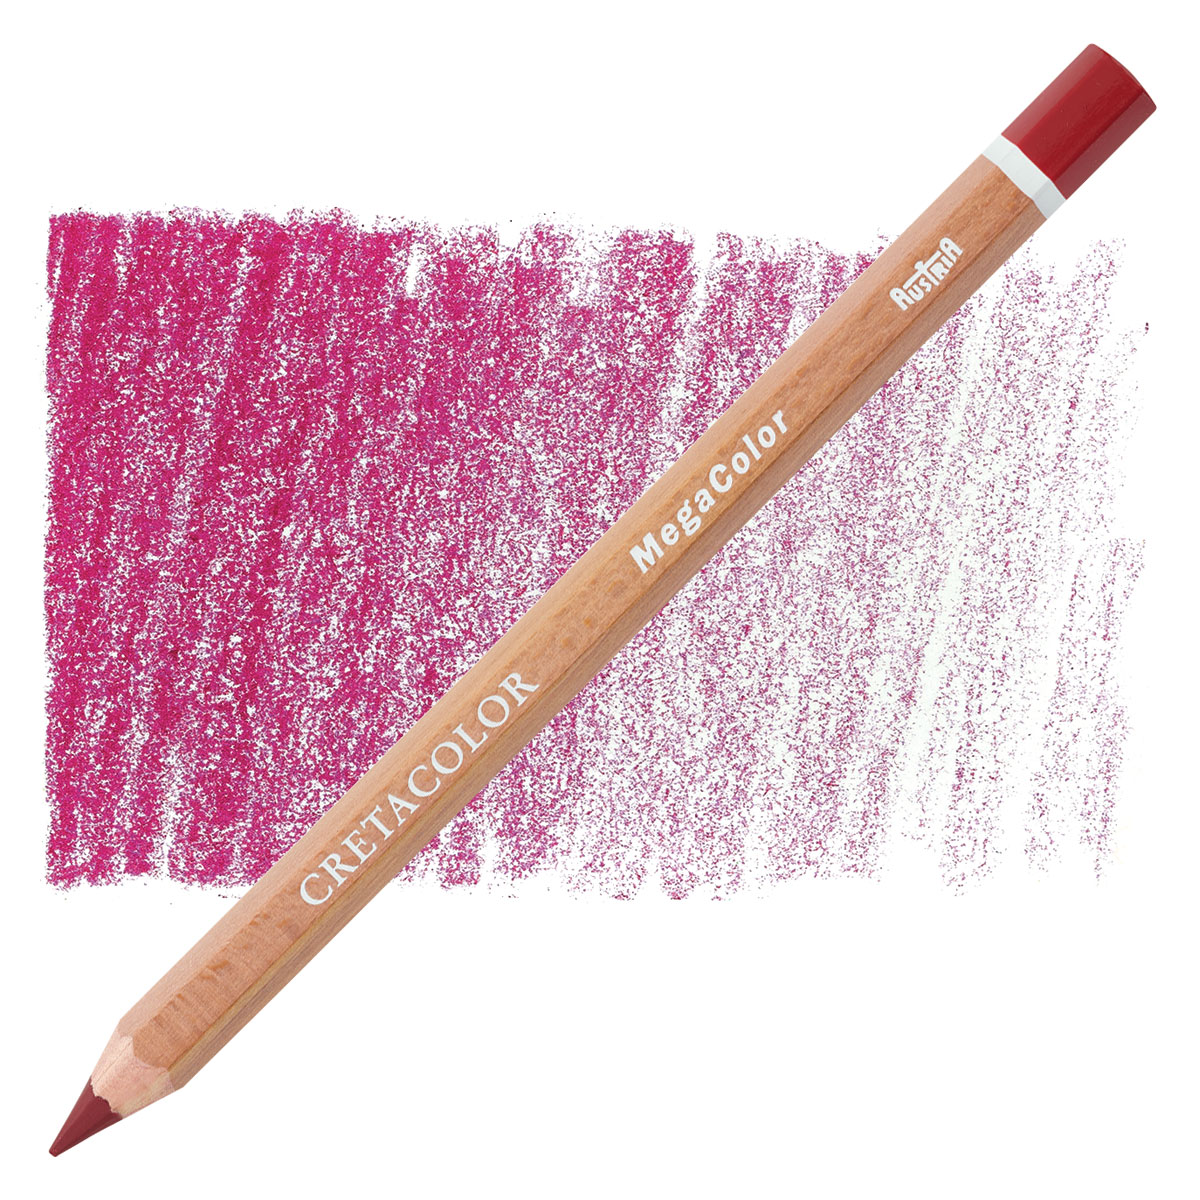 Making a Mark Reviews: Luminance 6901 Coloured Pencils